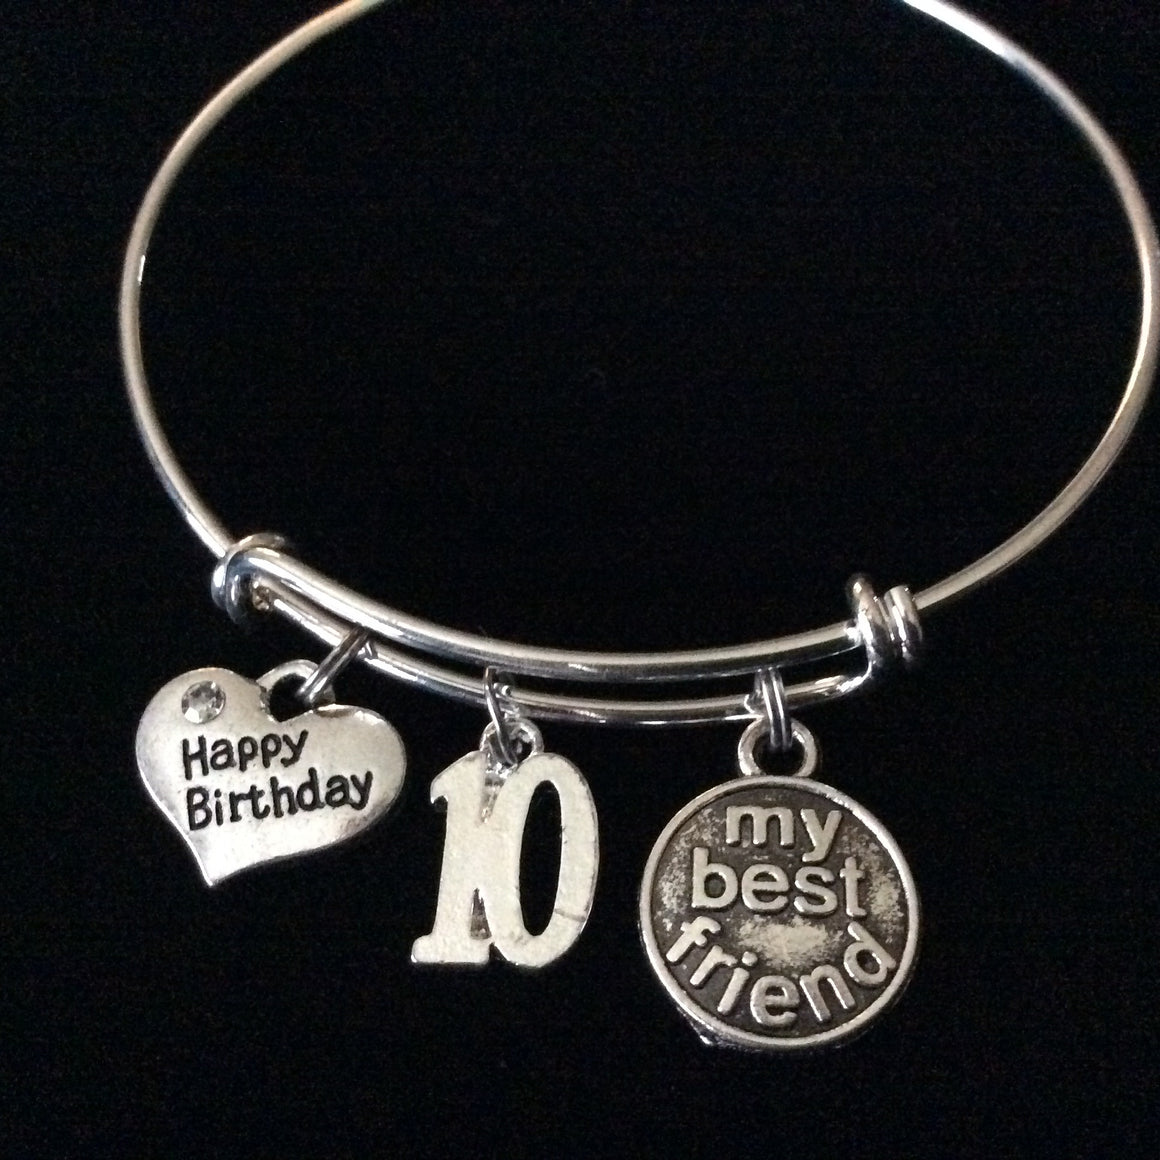 Happy 10th Birthday My Best Friend Expandable Charm Bracelet Adjustable Bangle Gift